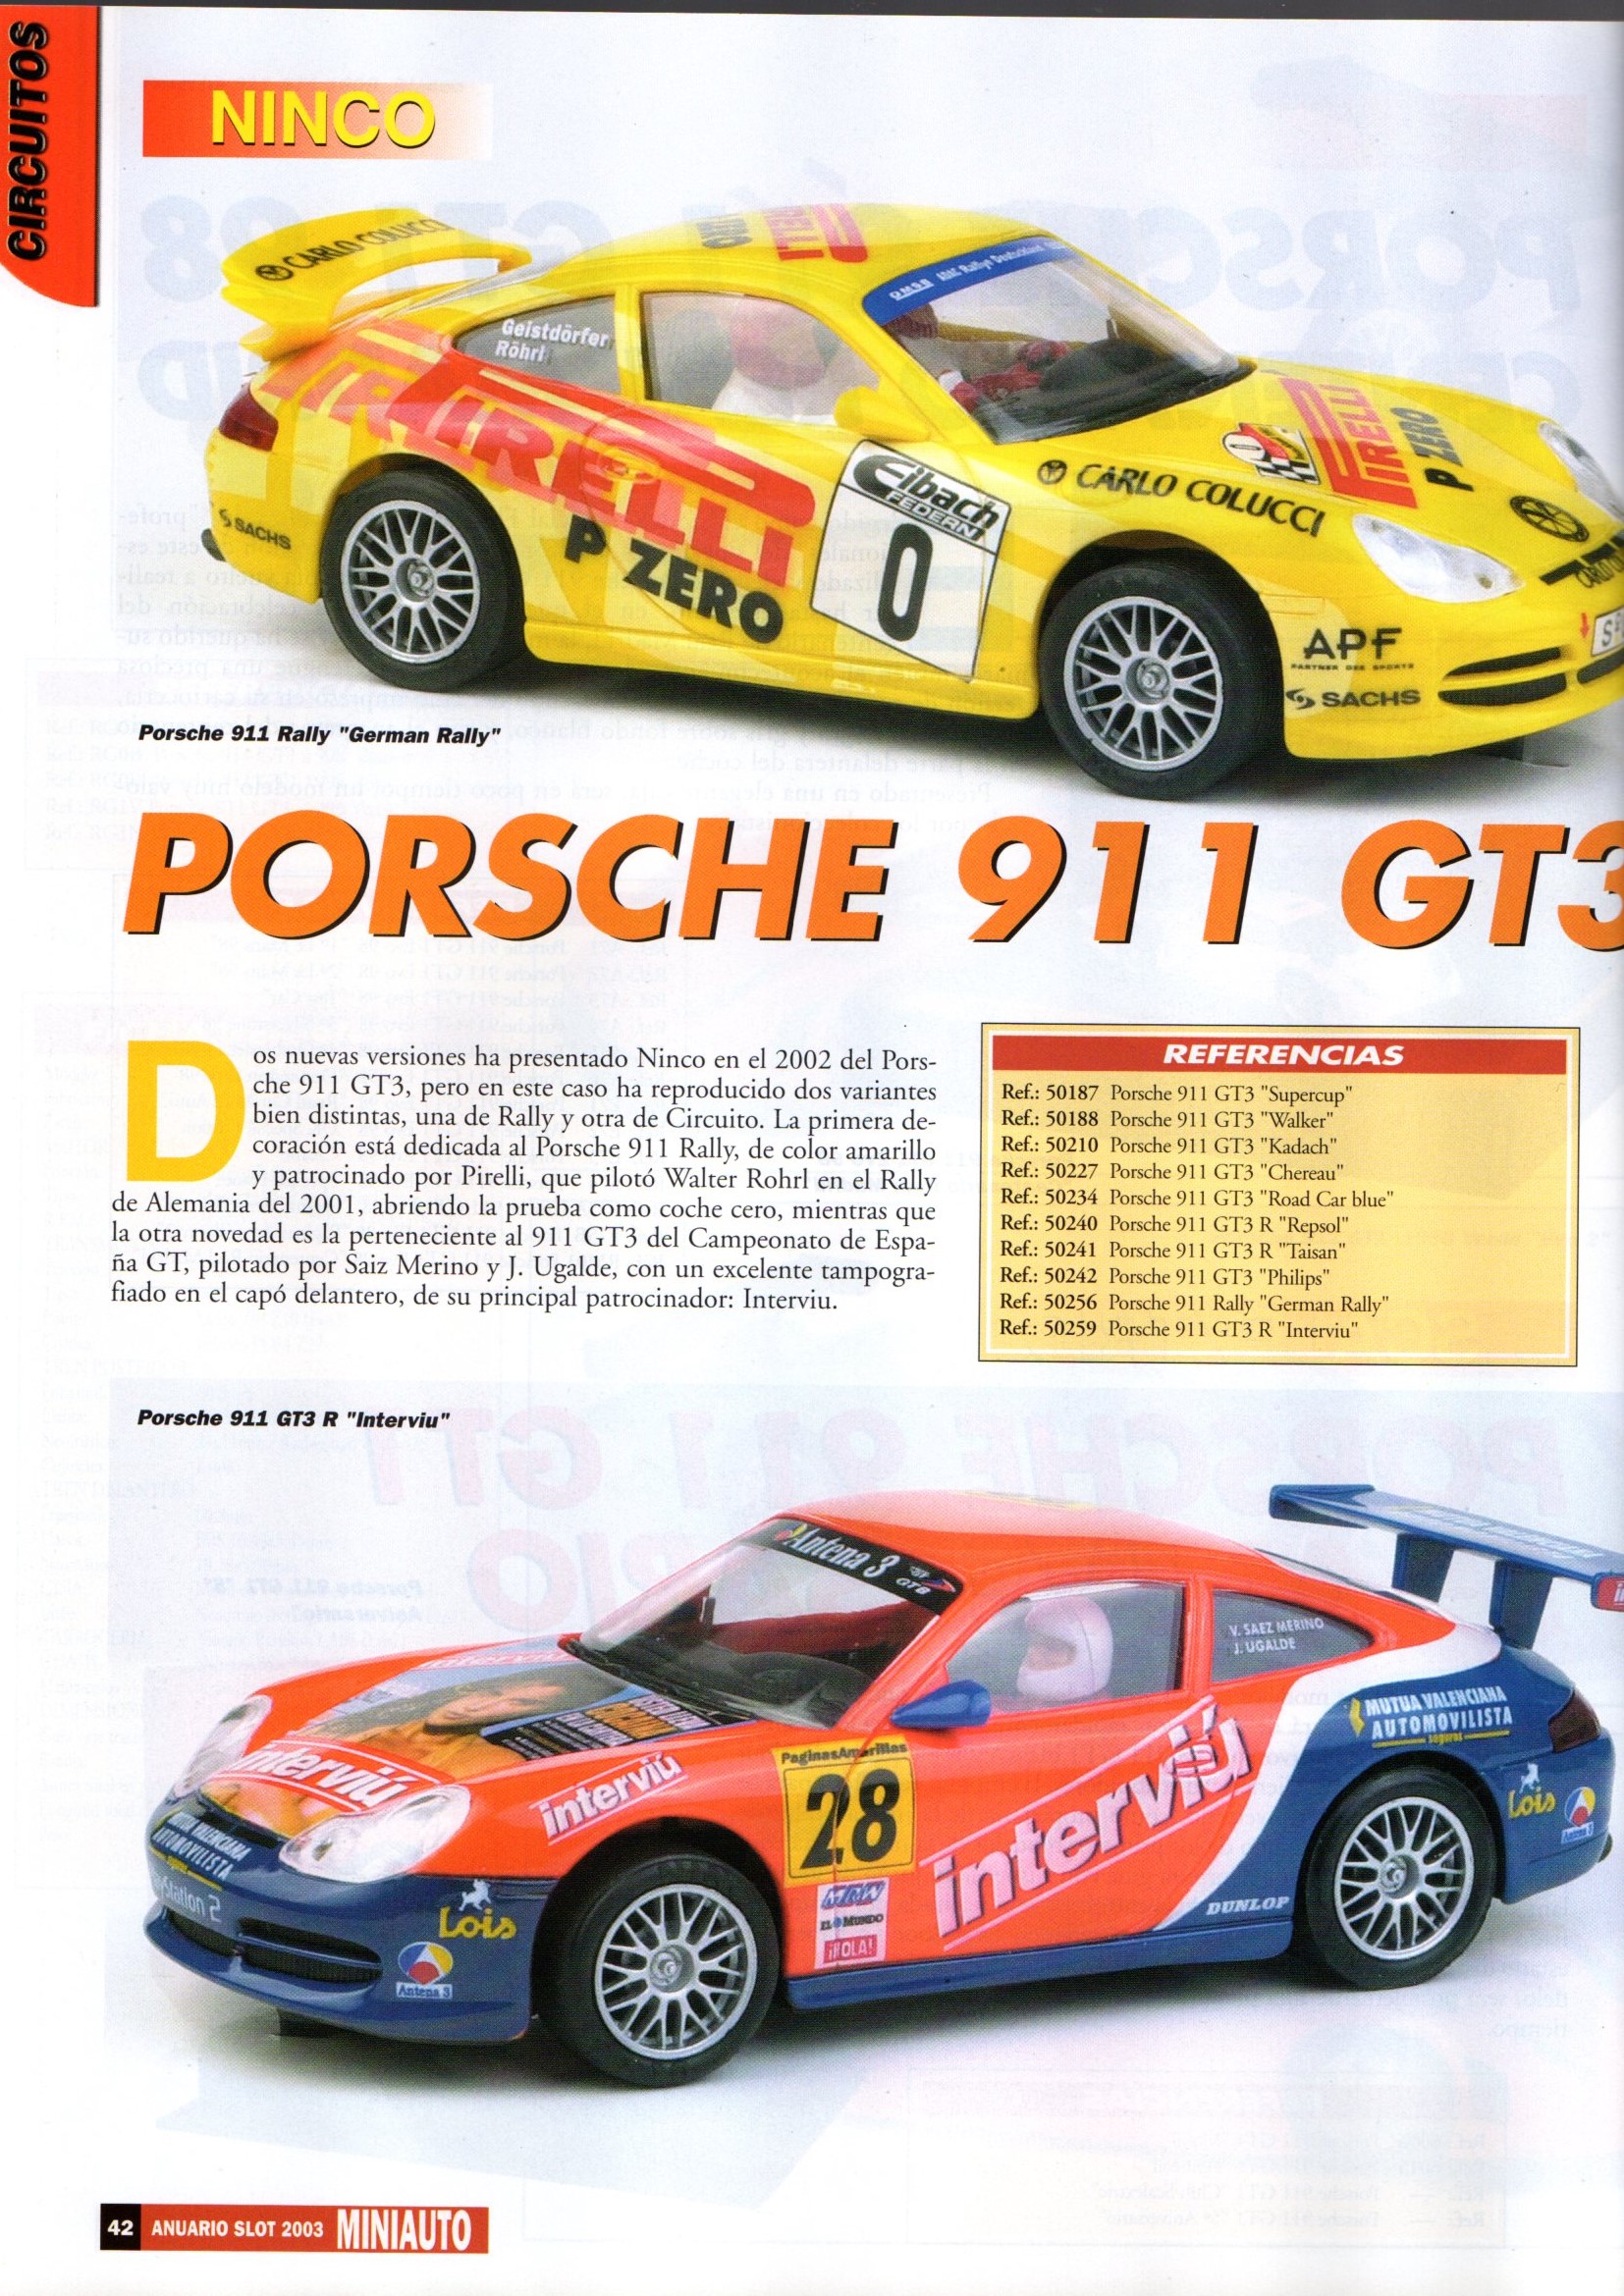 Porsche 911 GT3 R (50304